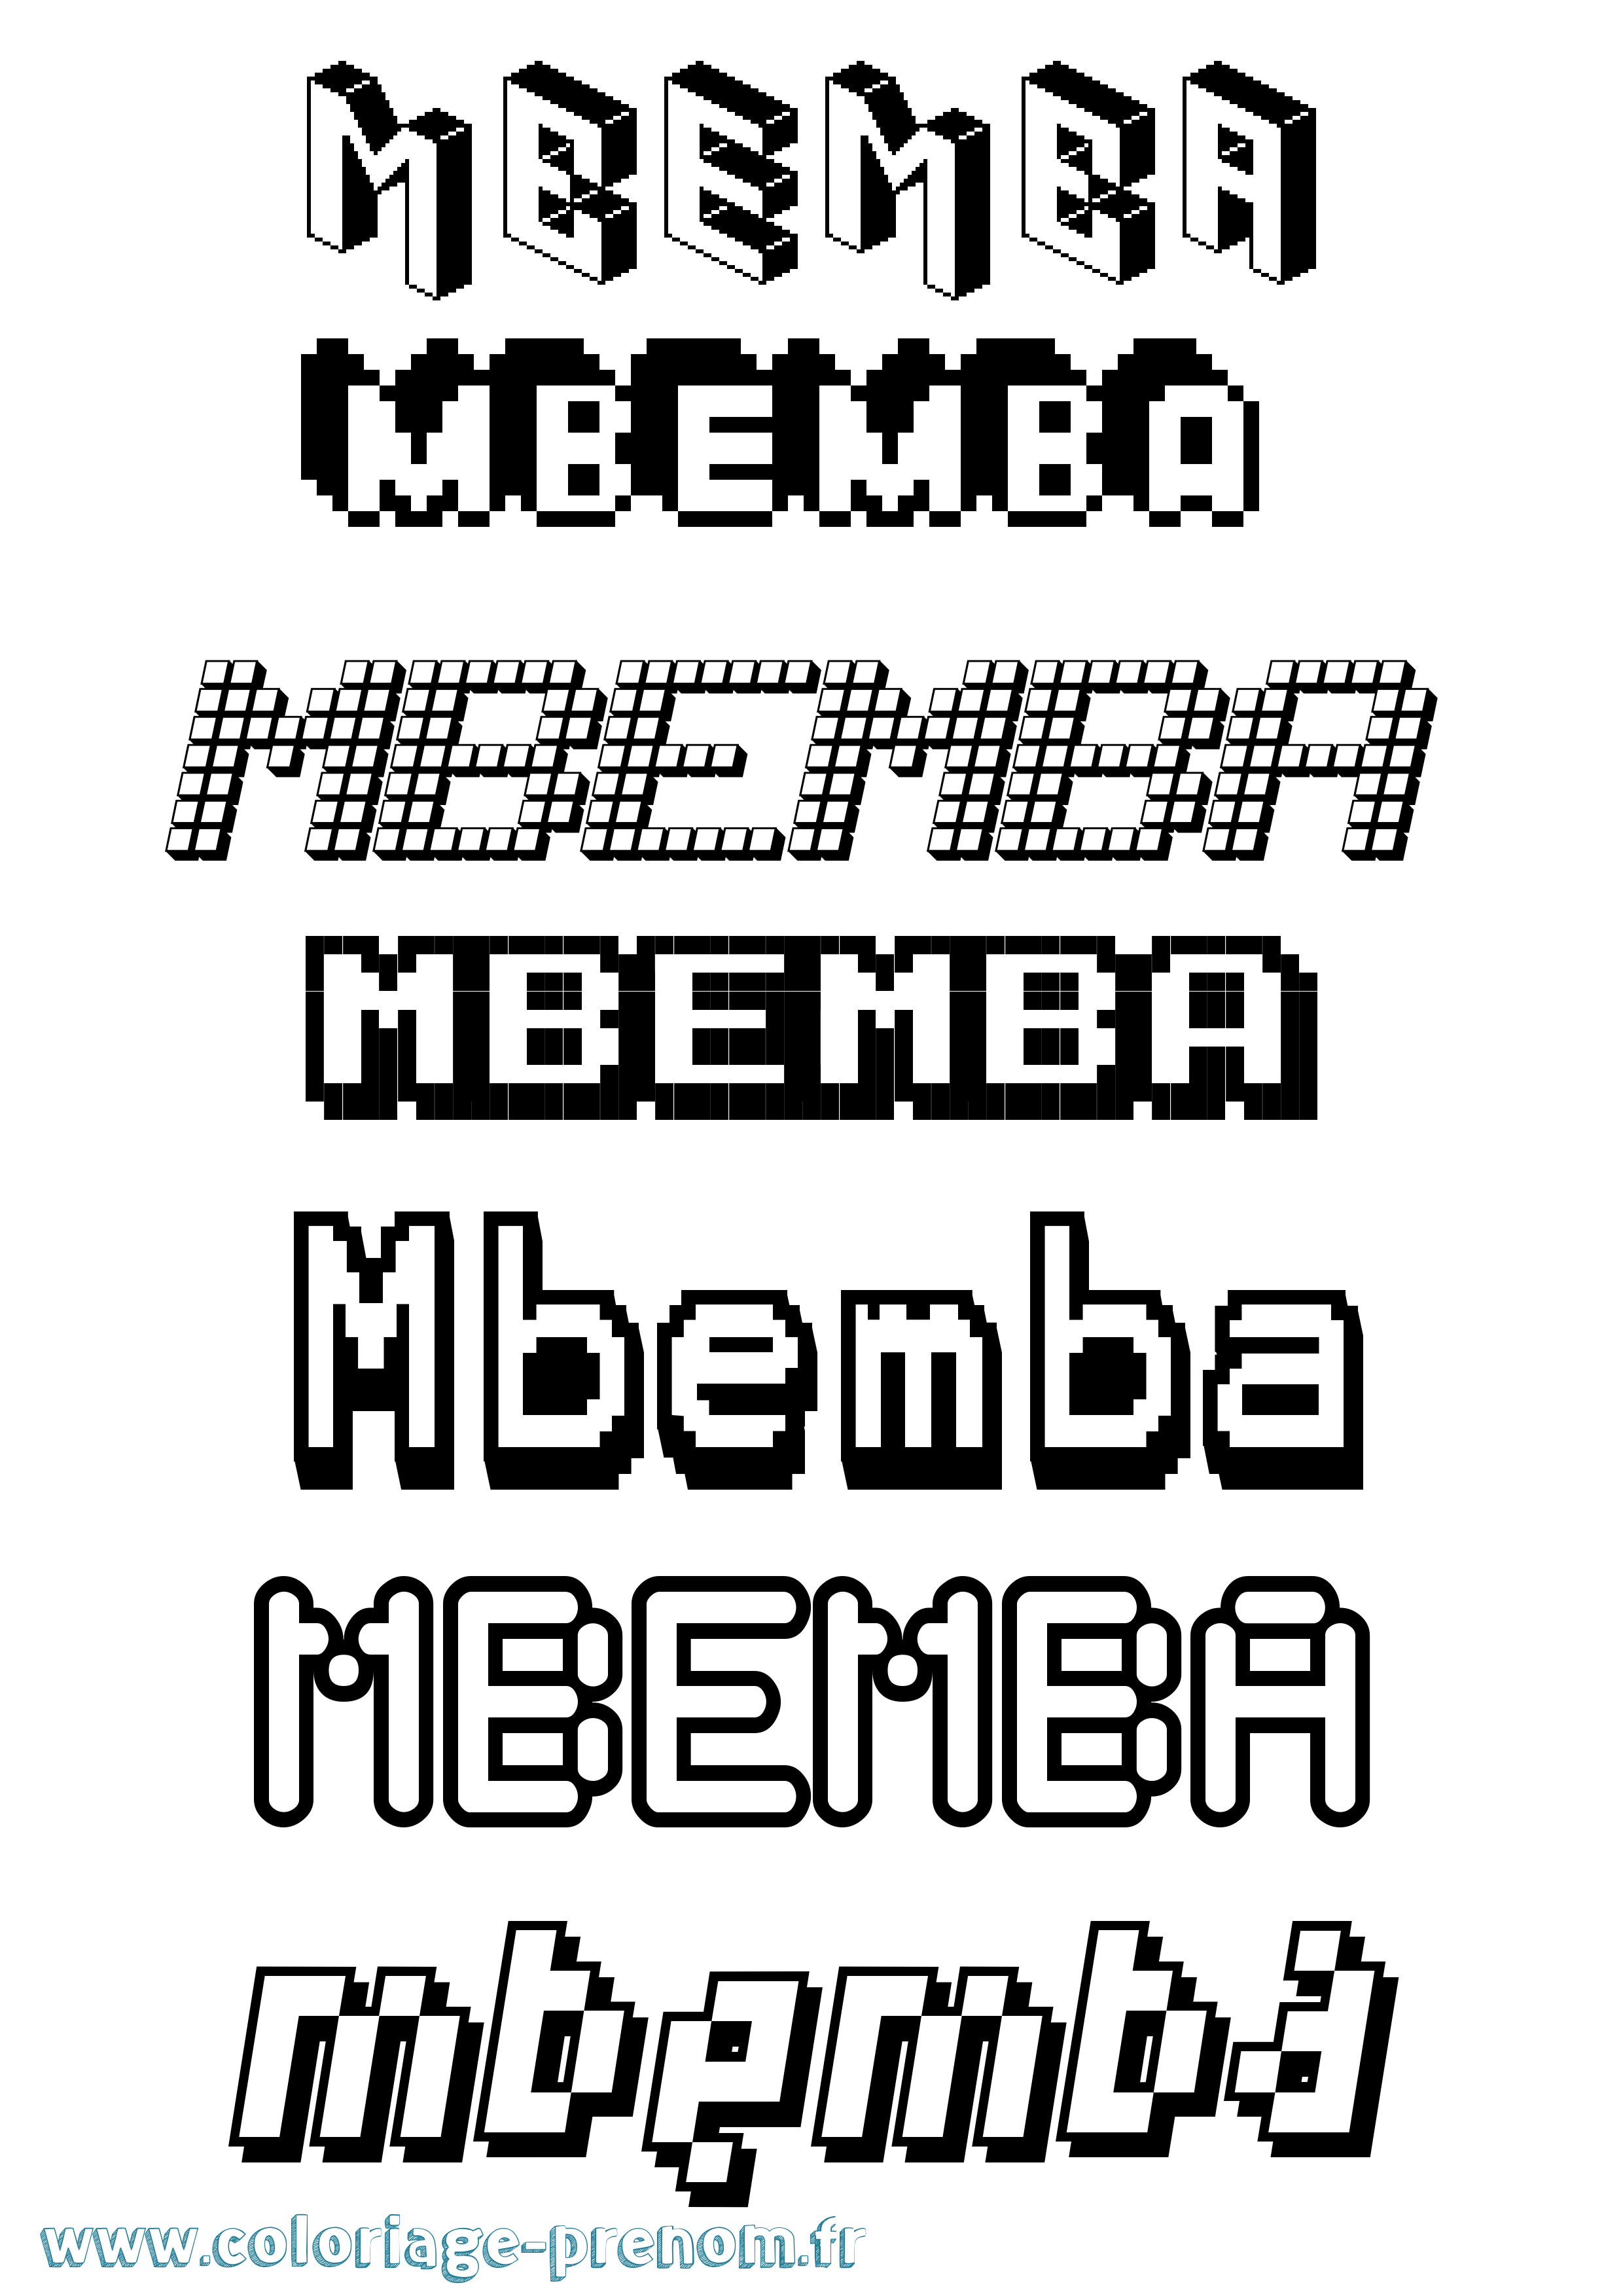 Coloriage prénom Mbemba Pixel